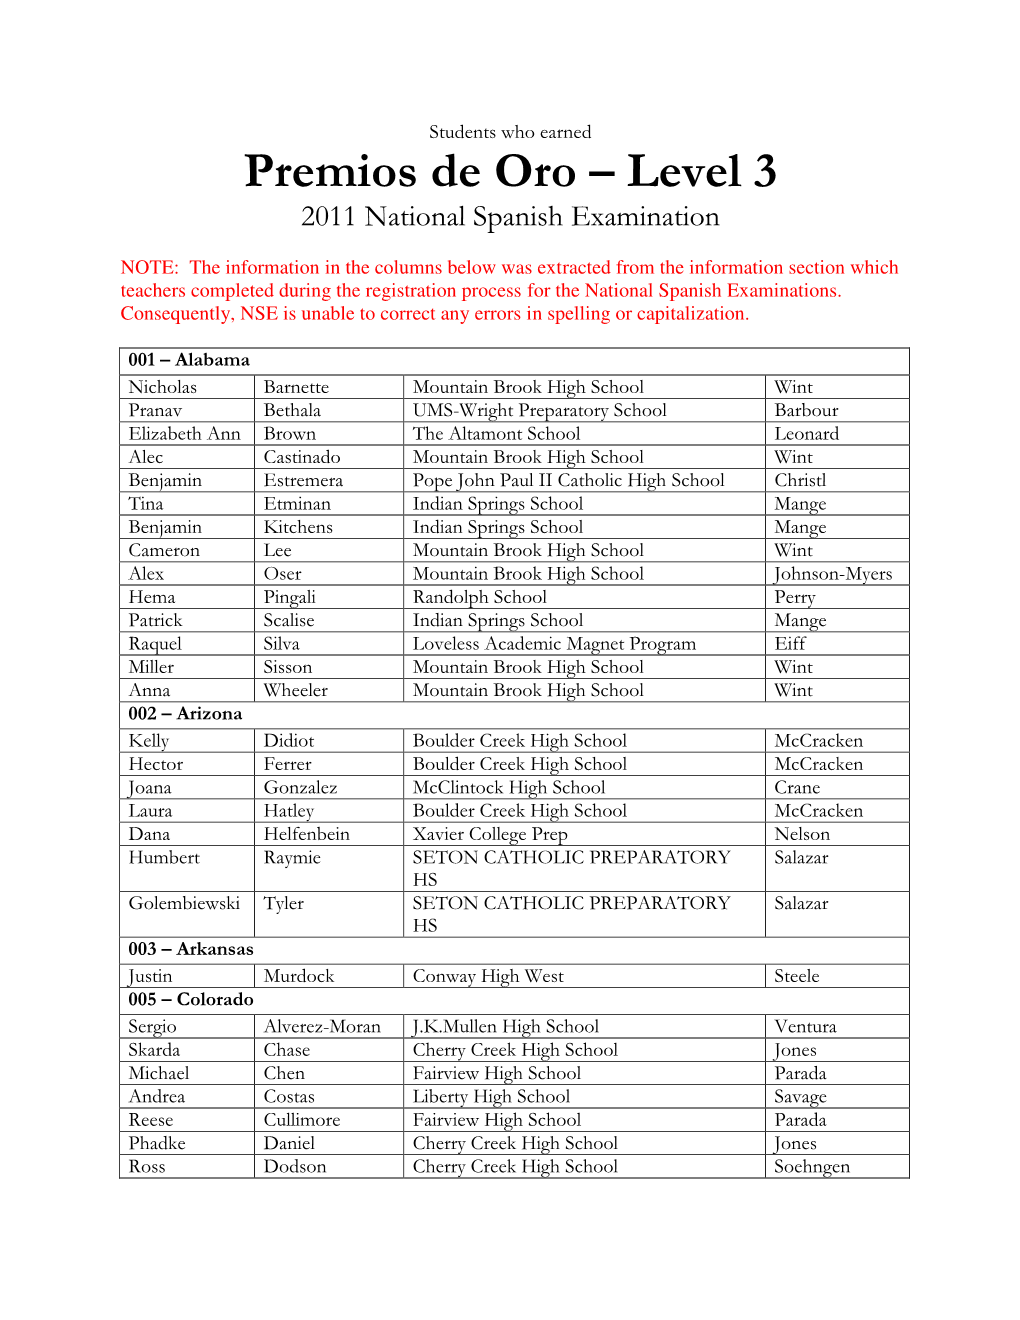 Premios De Oro – Level 3 2011 National Spanish Examination